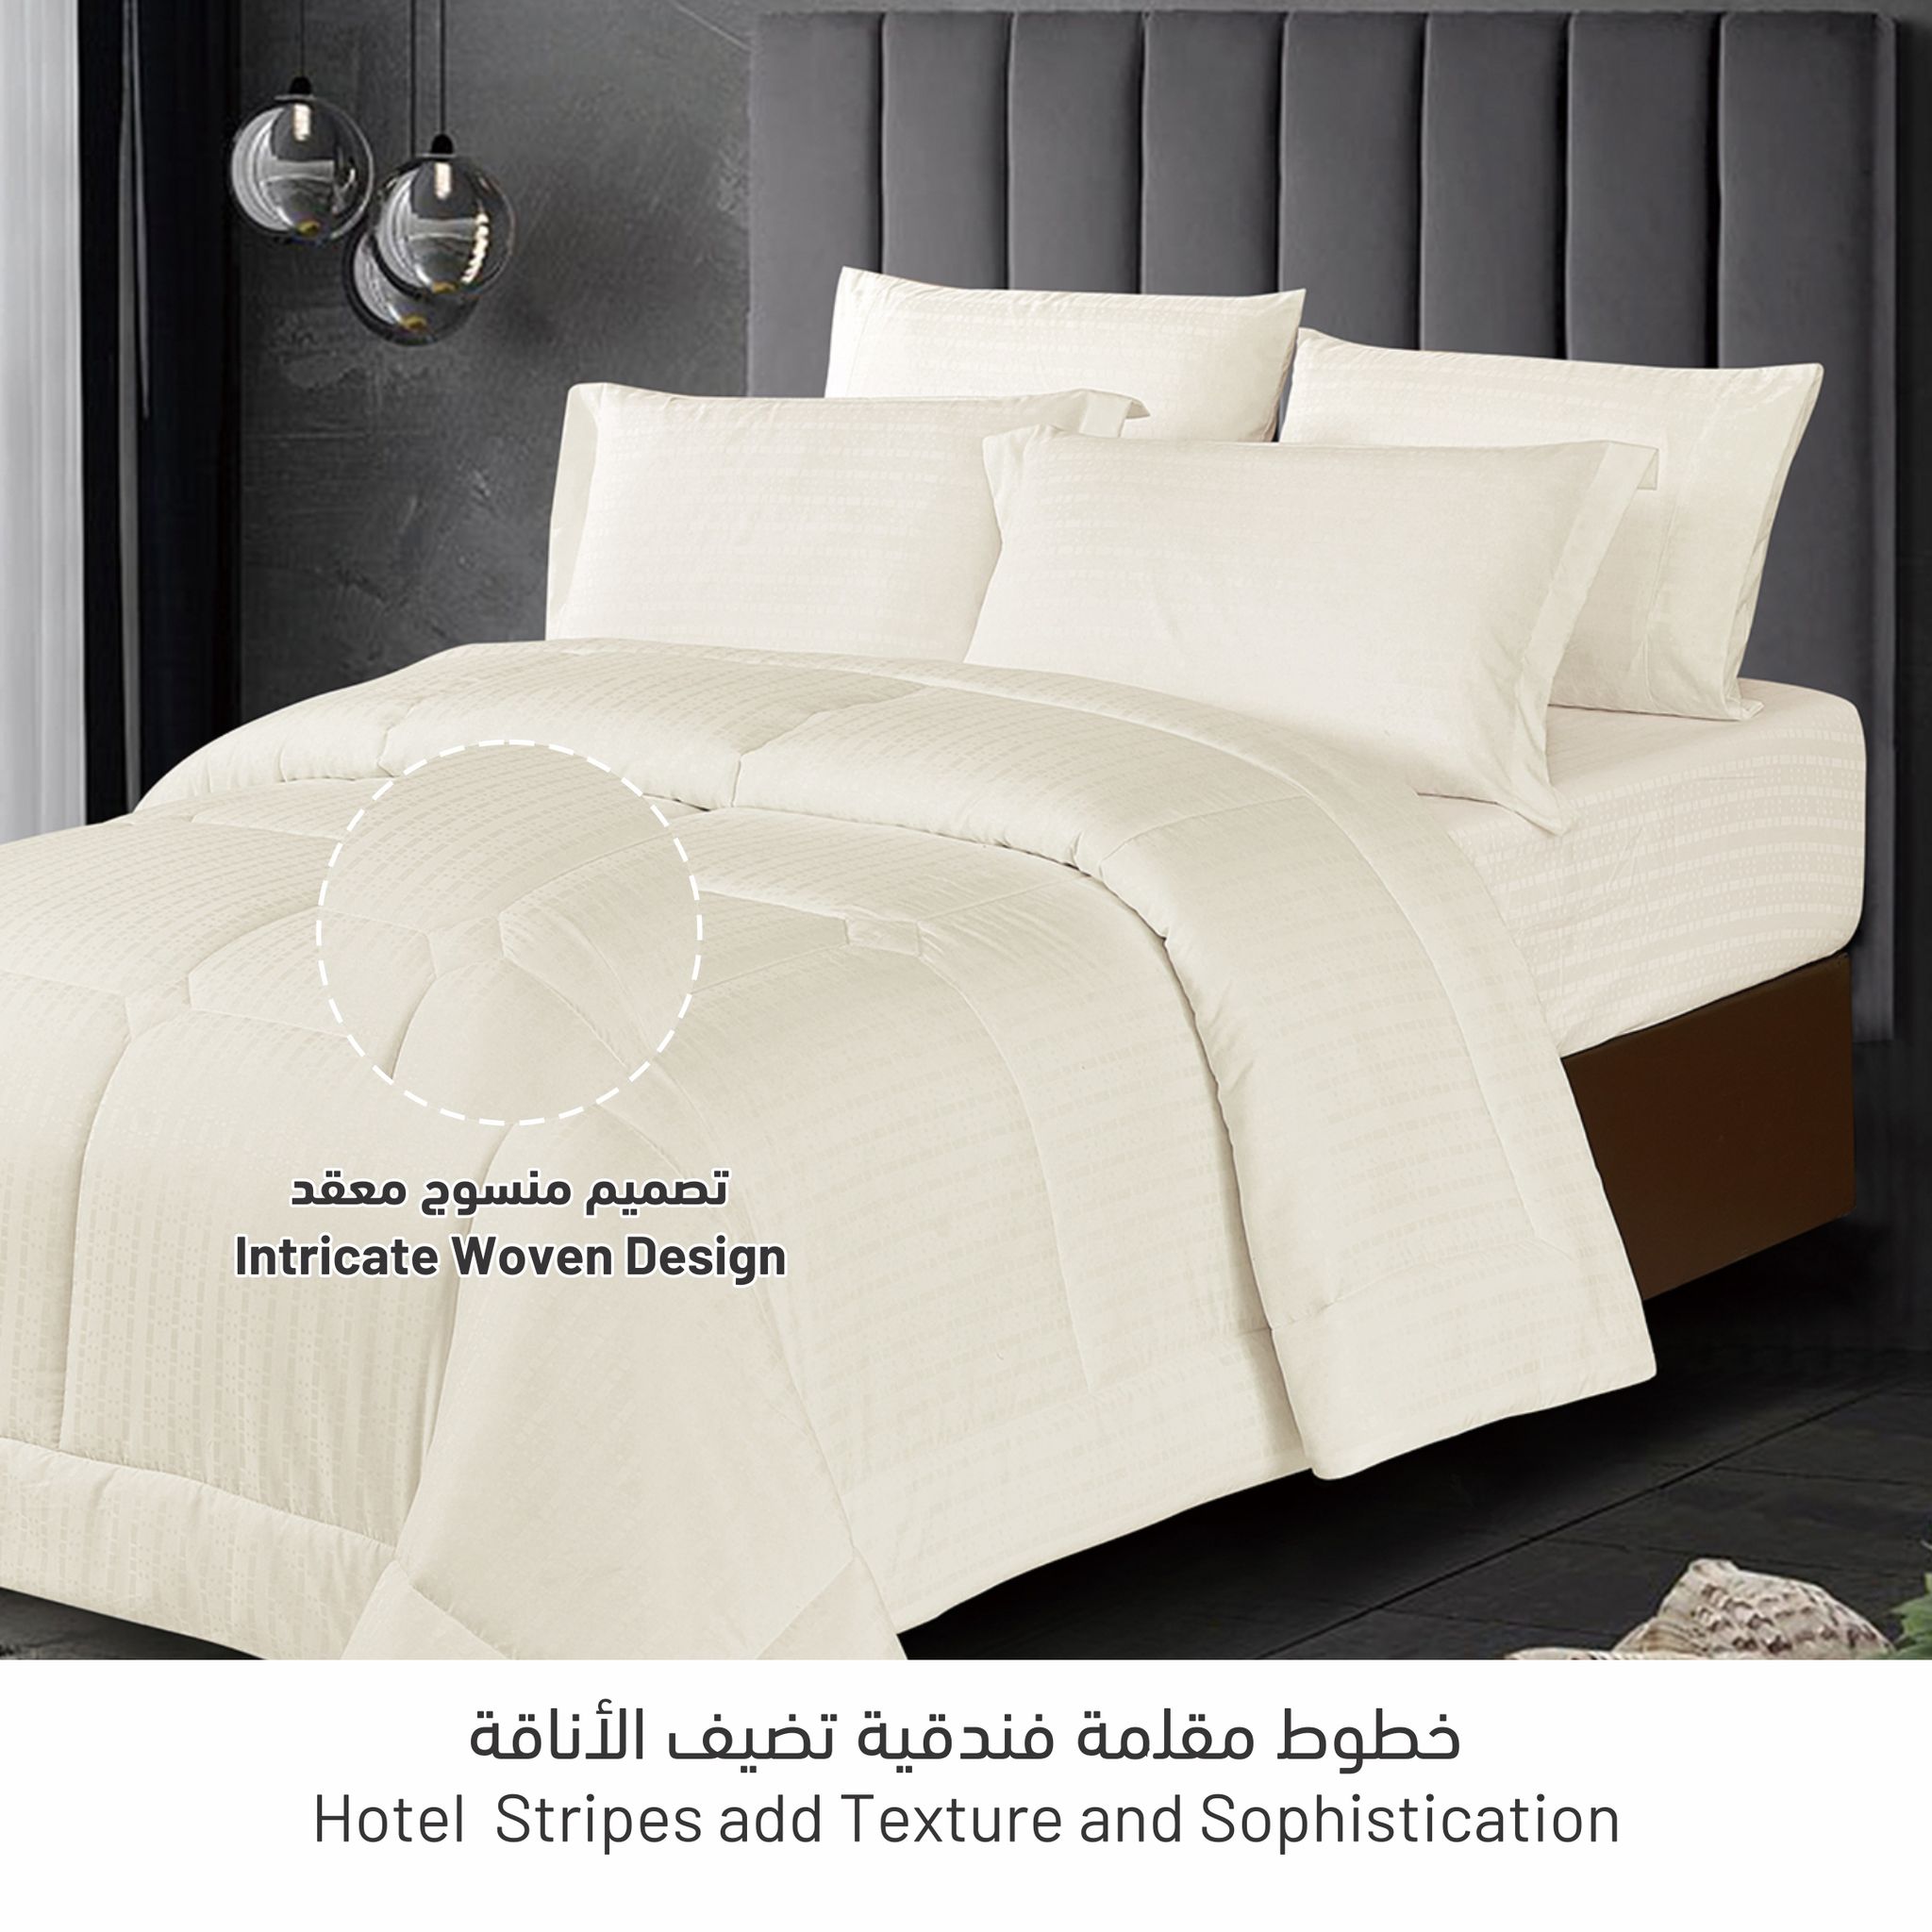 6-Piece Italian Jacquard  Hotel  Comforter  ,Dobby Broken Stripes Quilted ,King 260 x 240 Cms , Cream